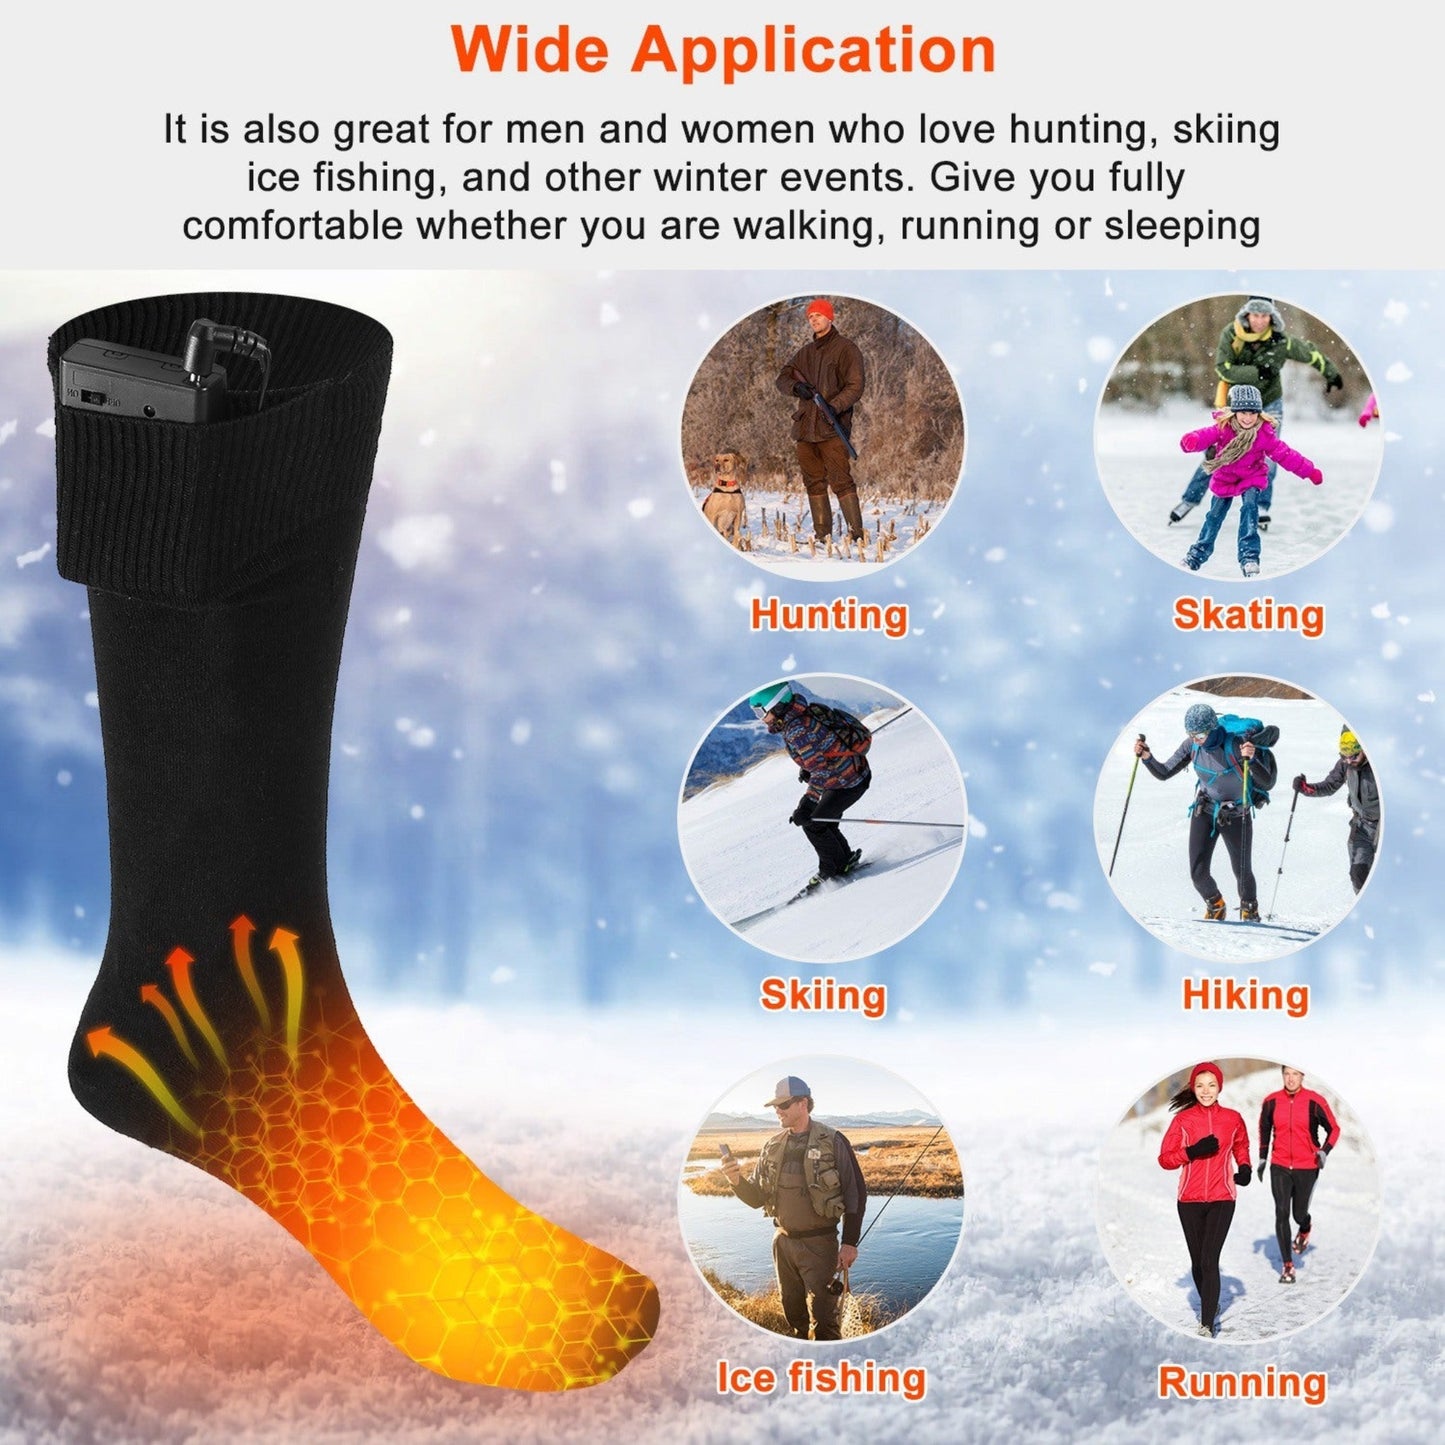 Unisex Electric Heated Socks